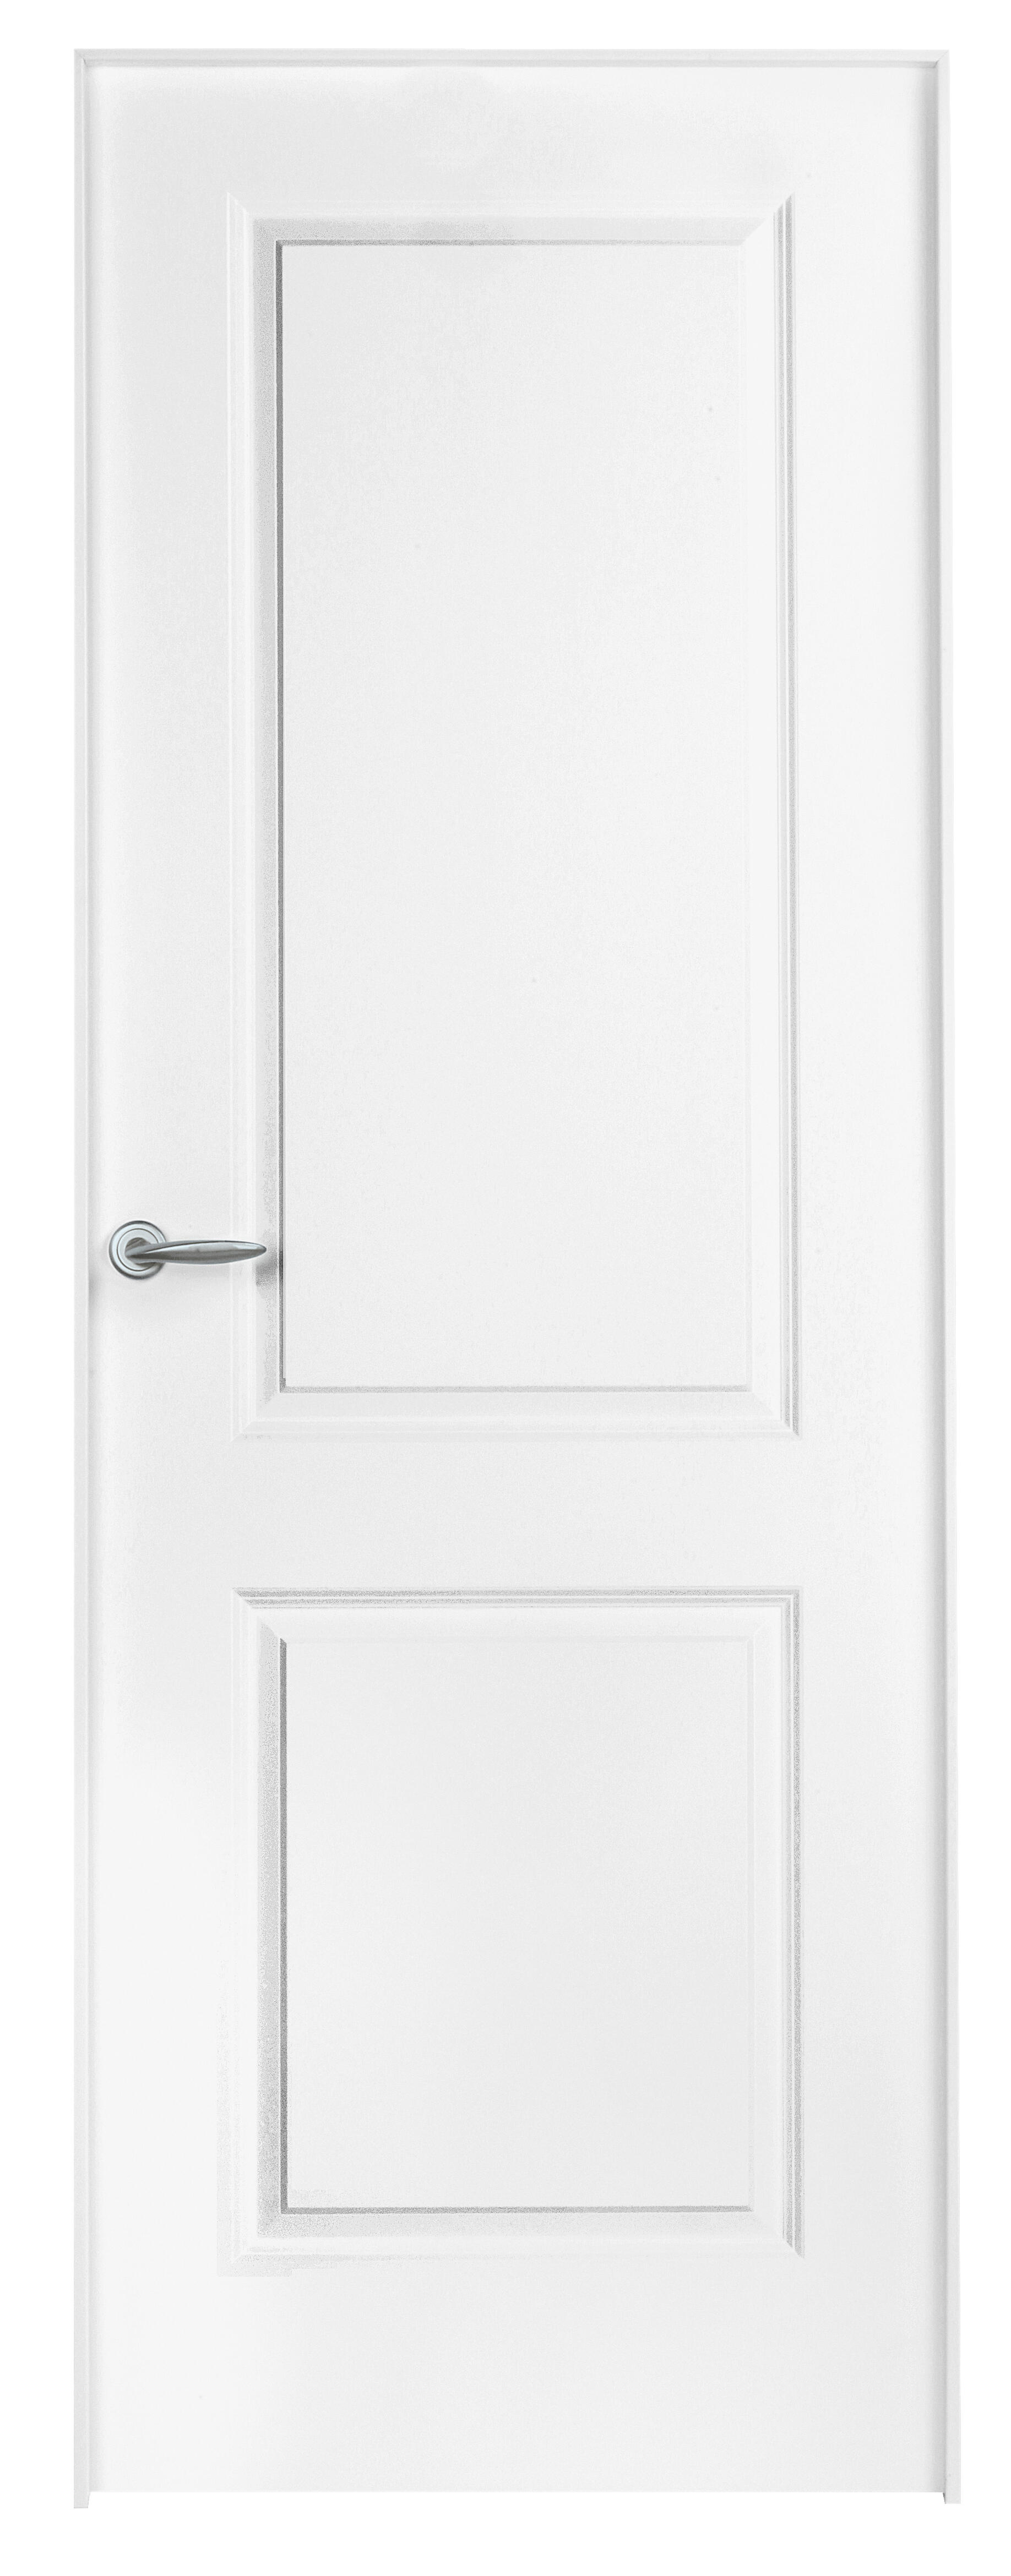 Puerta bonn blanco apertura derecha 72.5cm